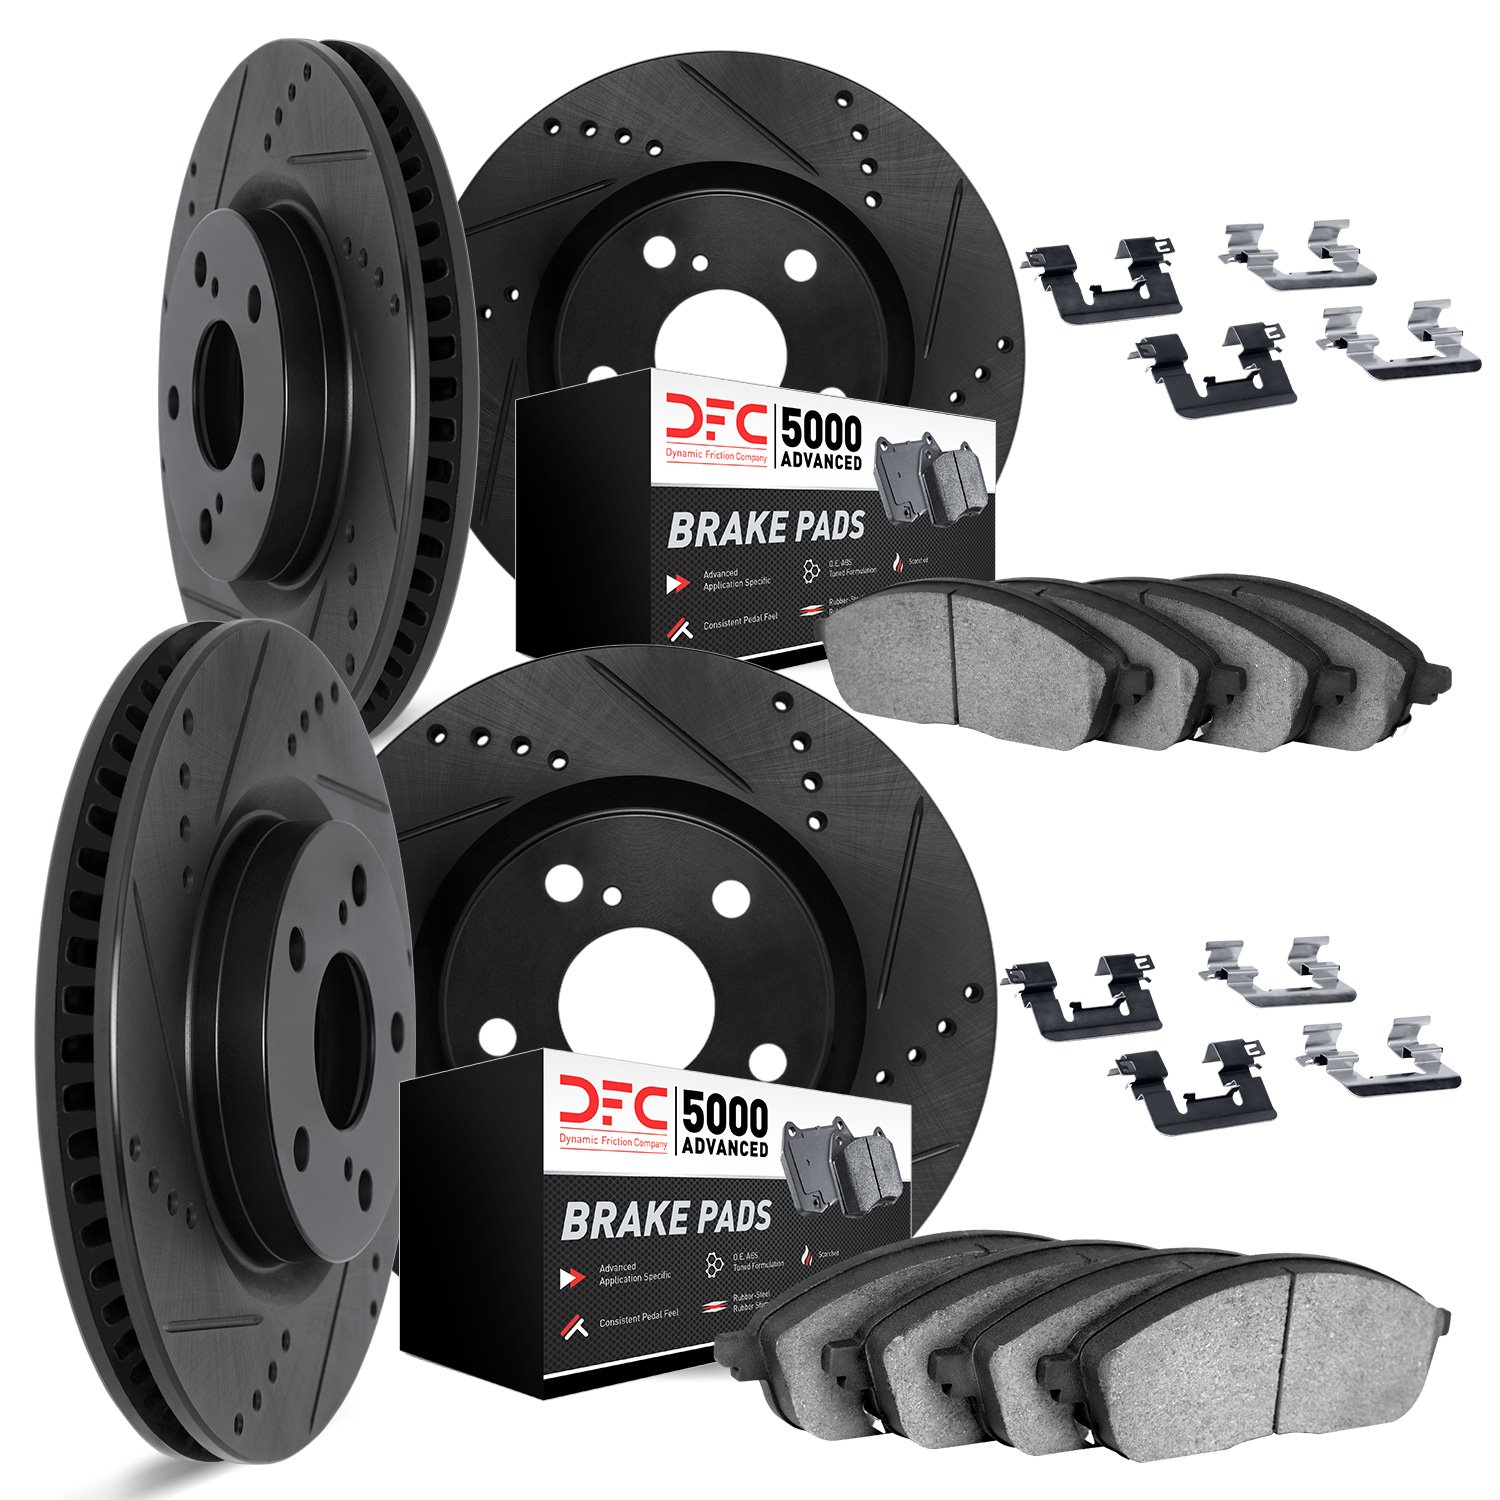 8514-40267 Drilled/Slotted Brake Rotors w/5000 Advanced Brake Pads Kit & Hardware [Black], 2005-2006 Mopar, Position: Front and